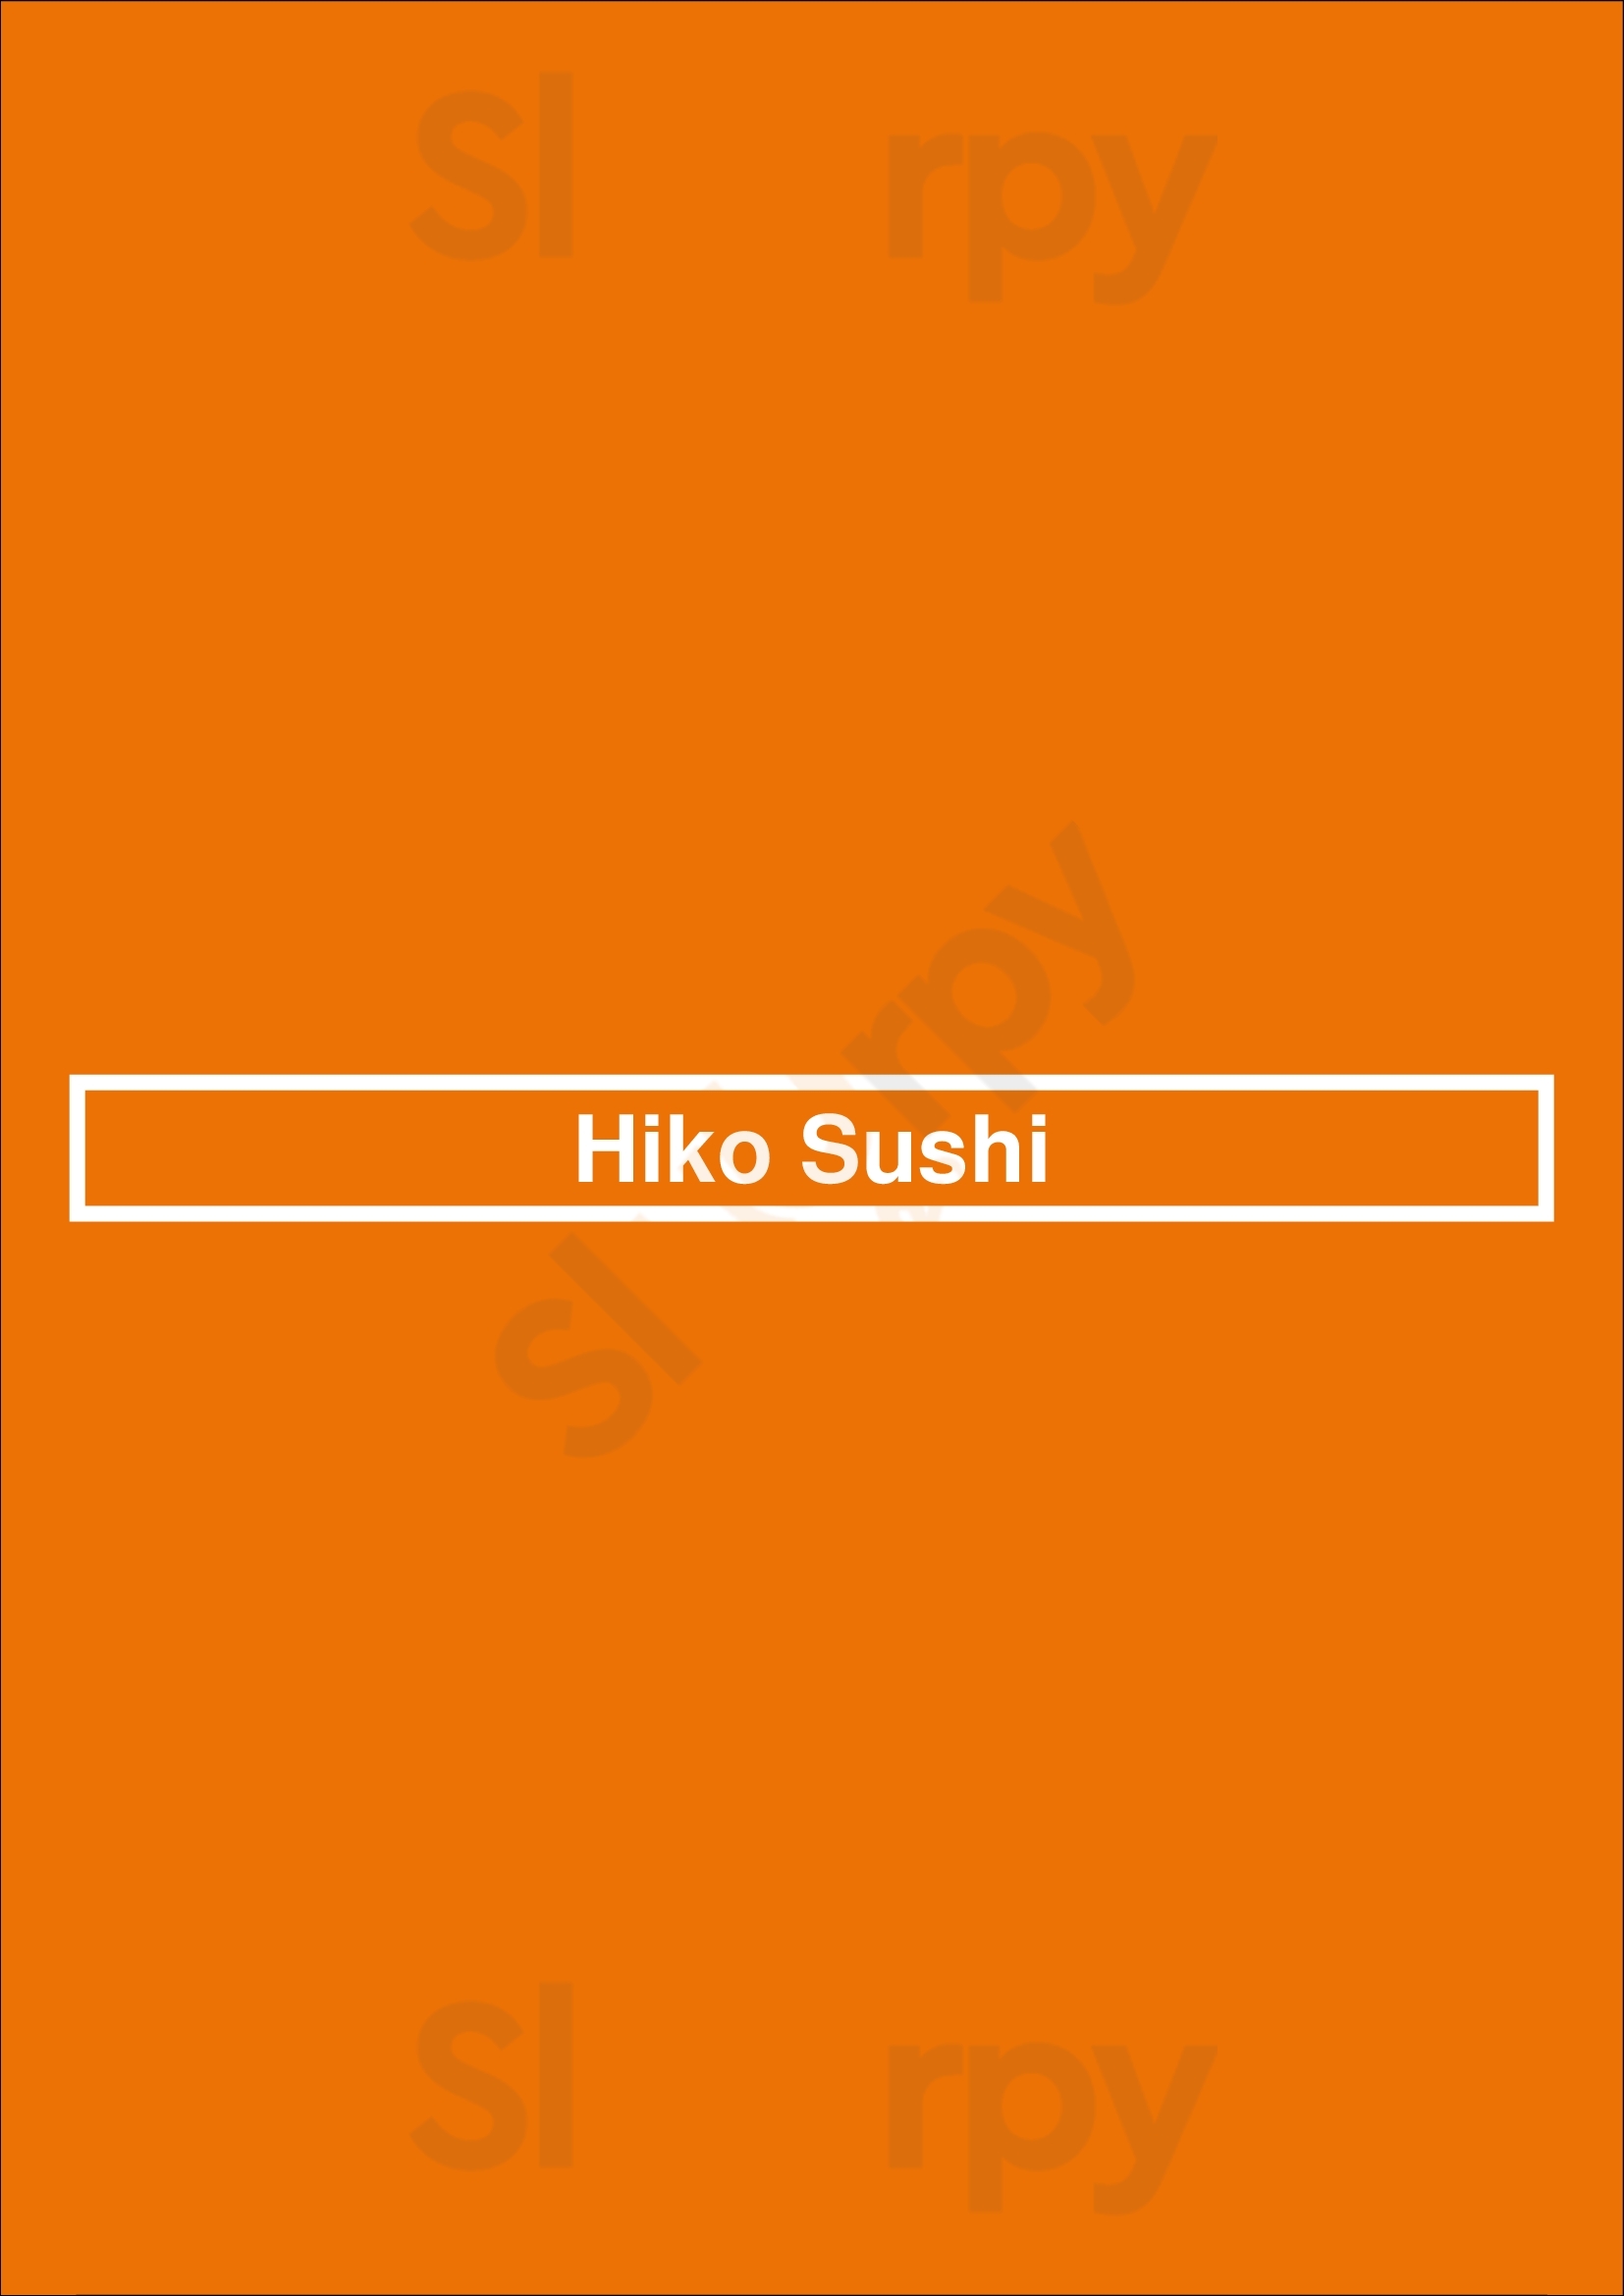 Hiko Sushi Eagan Menu - 1